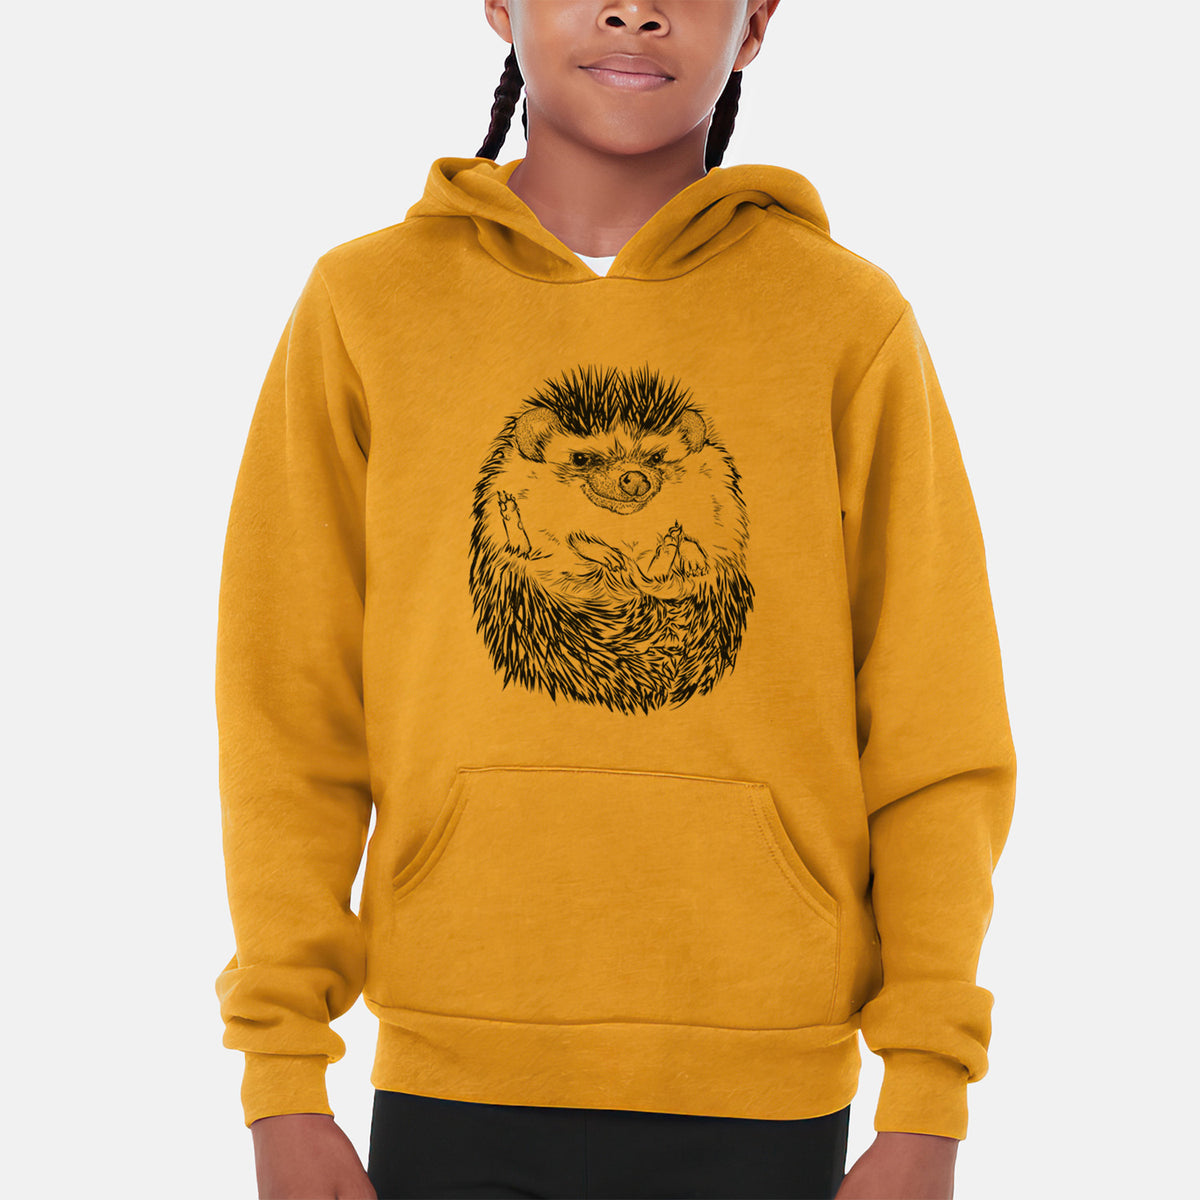 African Pygmy Hedgehog - Atelerix albiventris - Youth Hoodie Sweatshirt